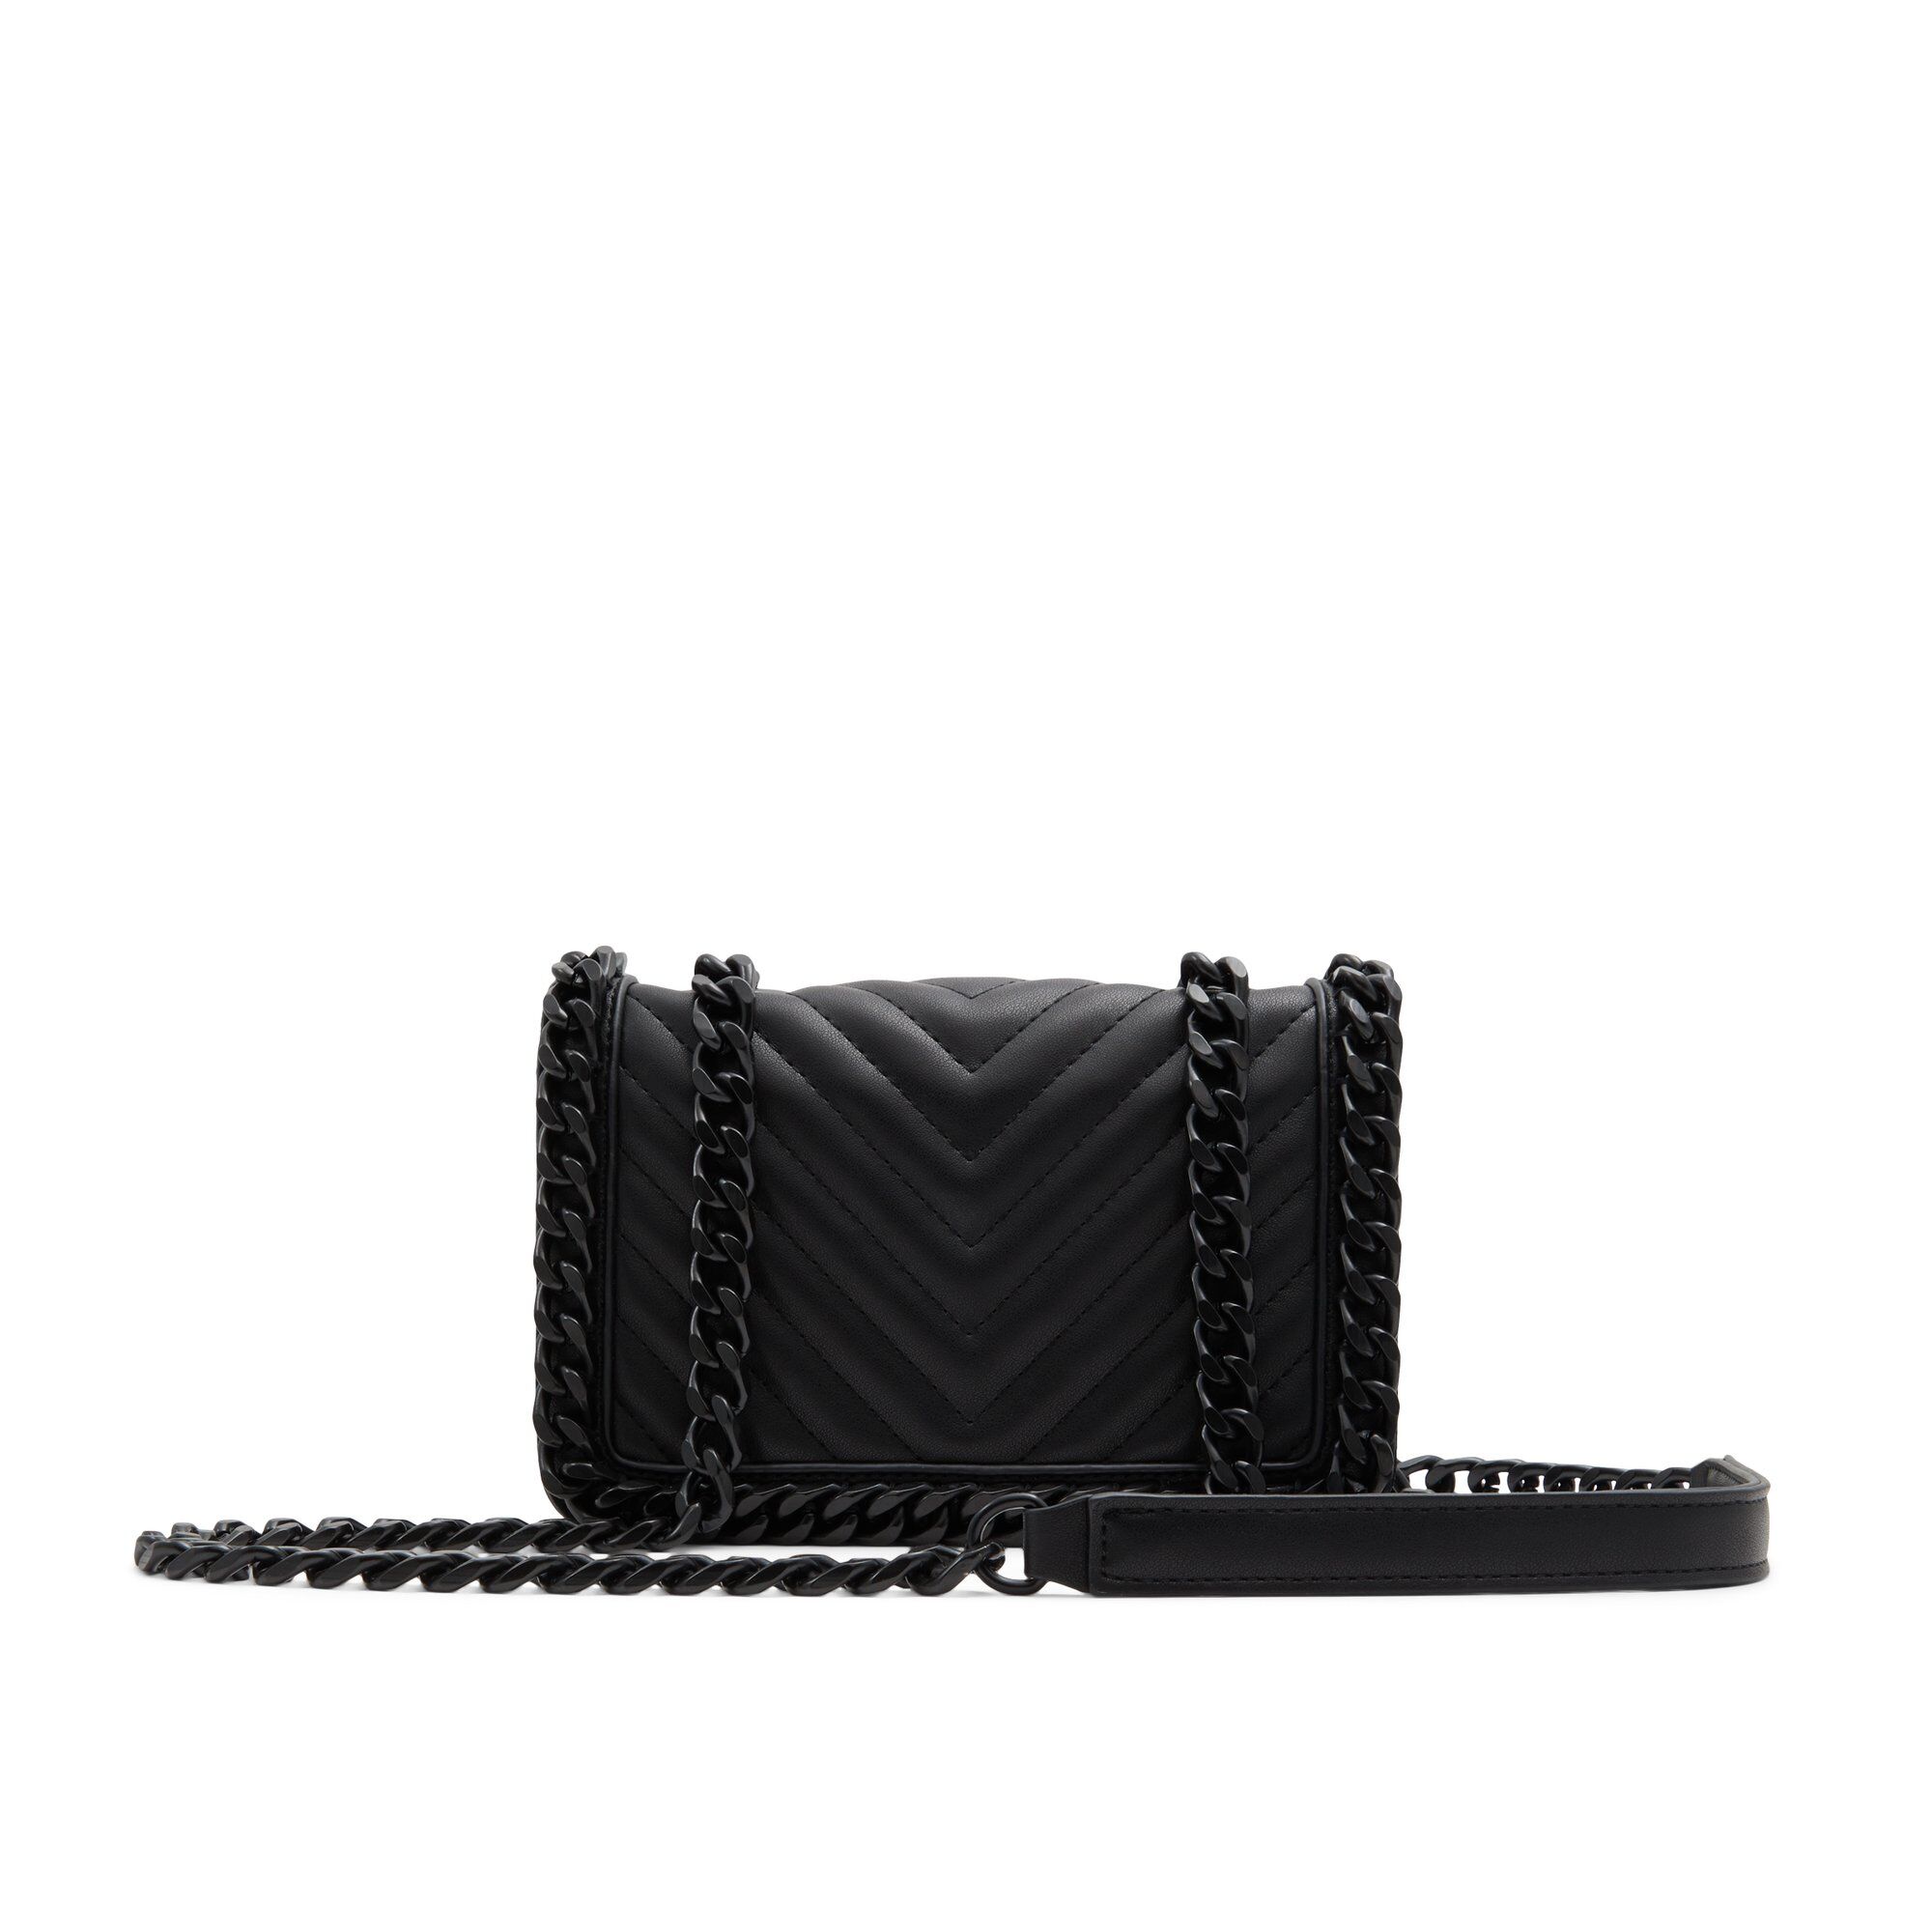 ALDO Migreenwaldd - Women's Crossbody Handbag - Black